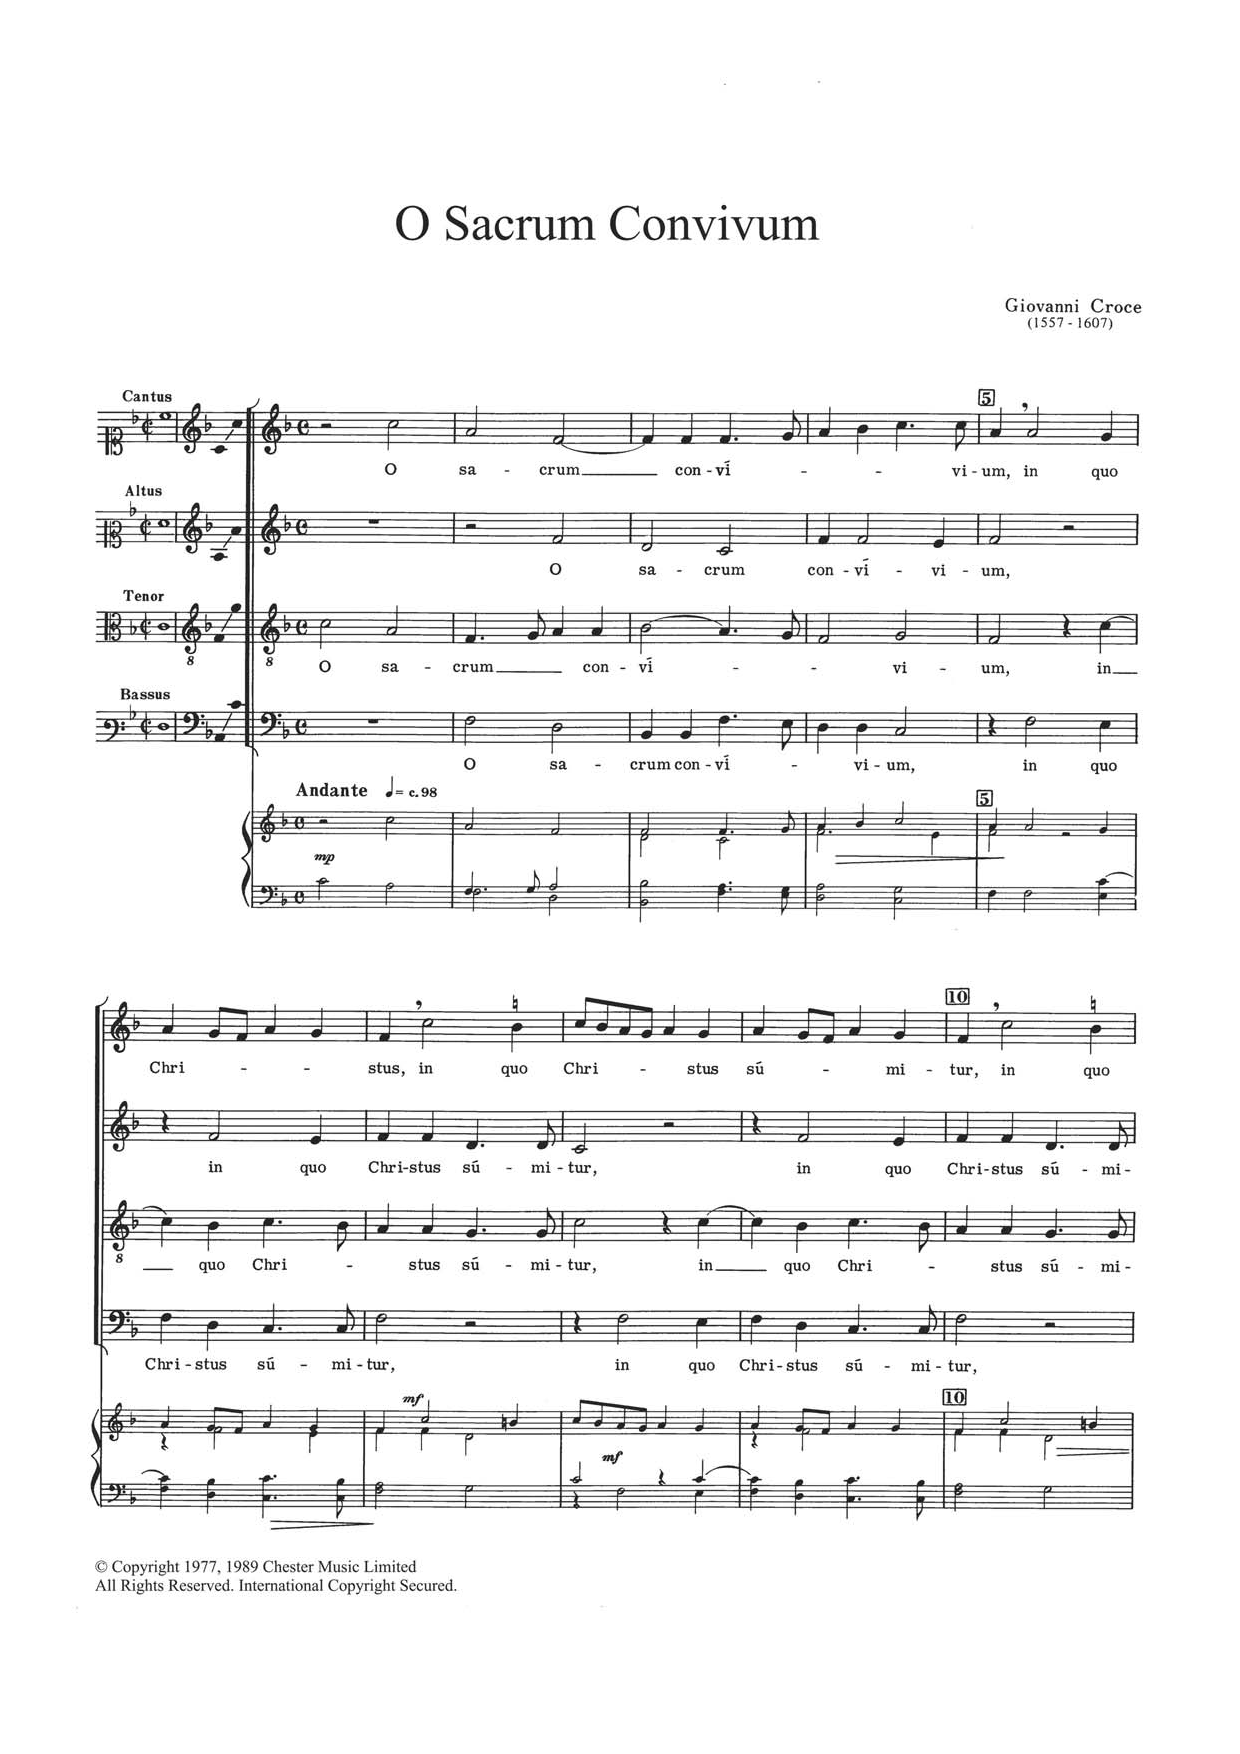 Download Giovanni Croce O Sacrum Convivium Sheet Music